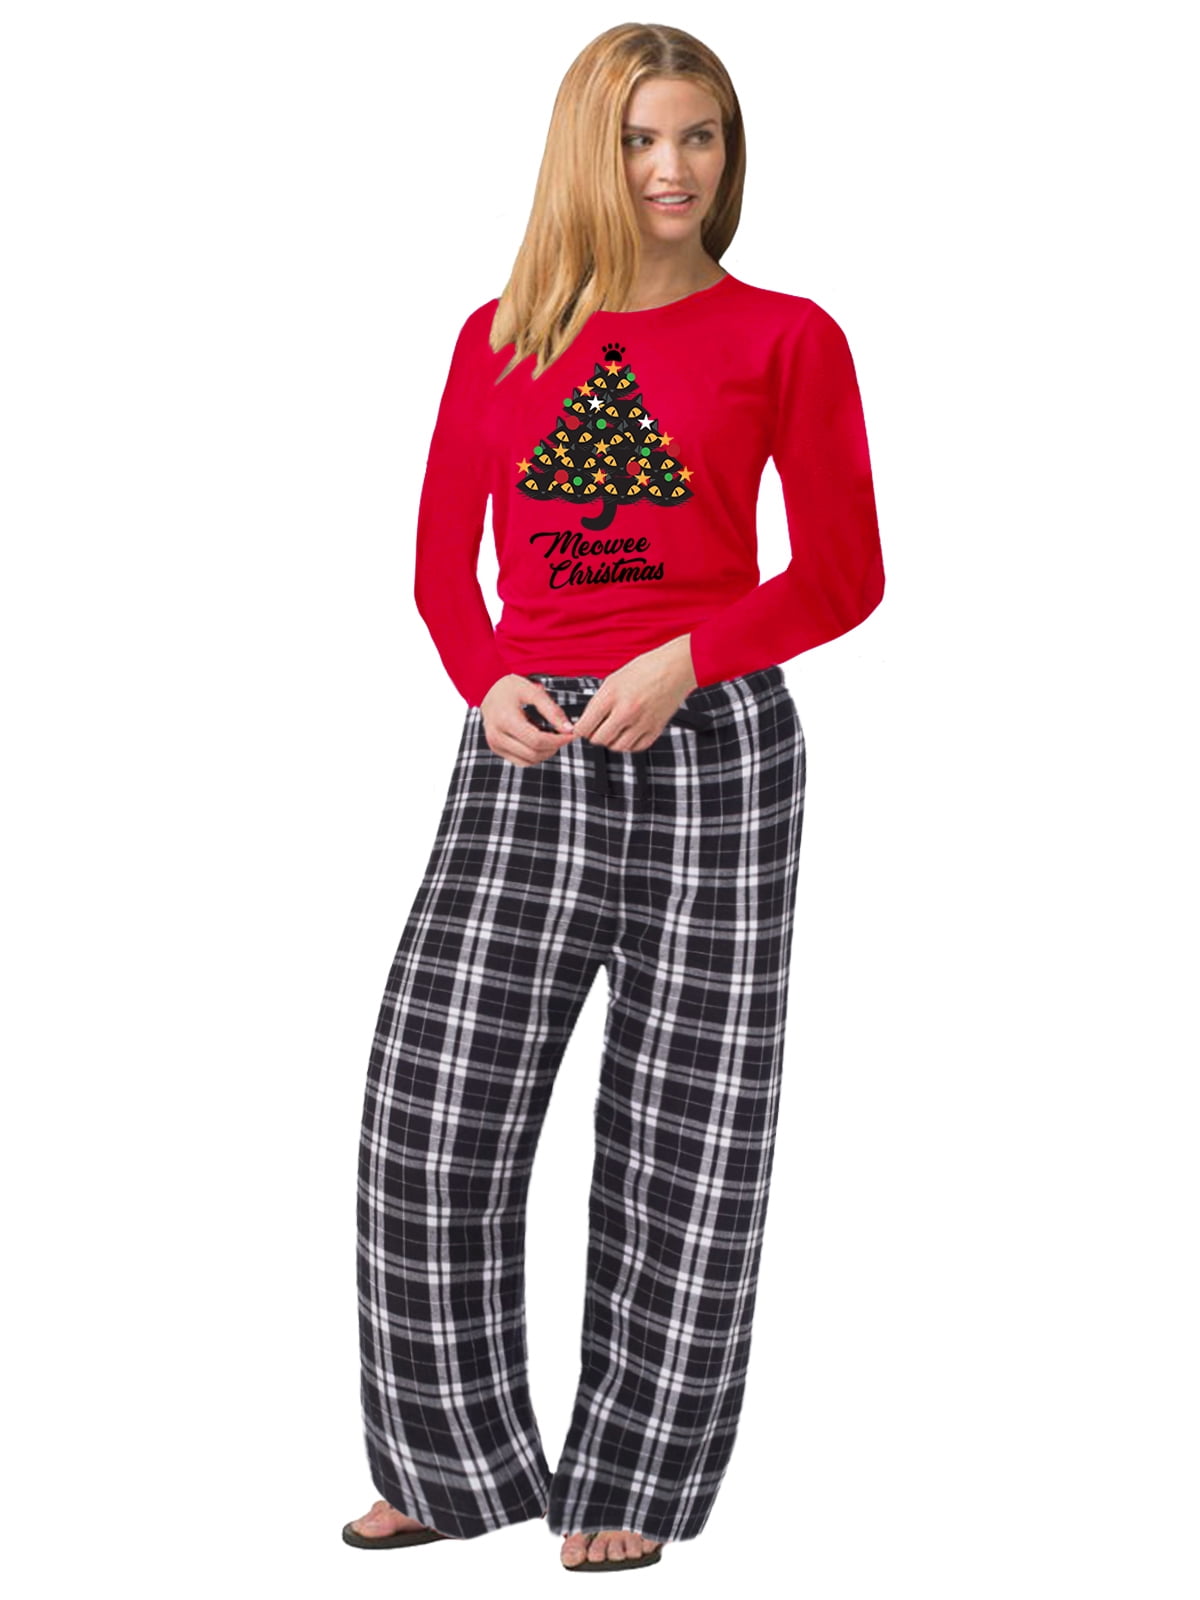 Awkward Styles - Awkward Styles Family Christmas Pajamas for Women Xmas